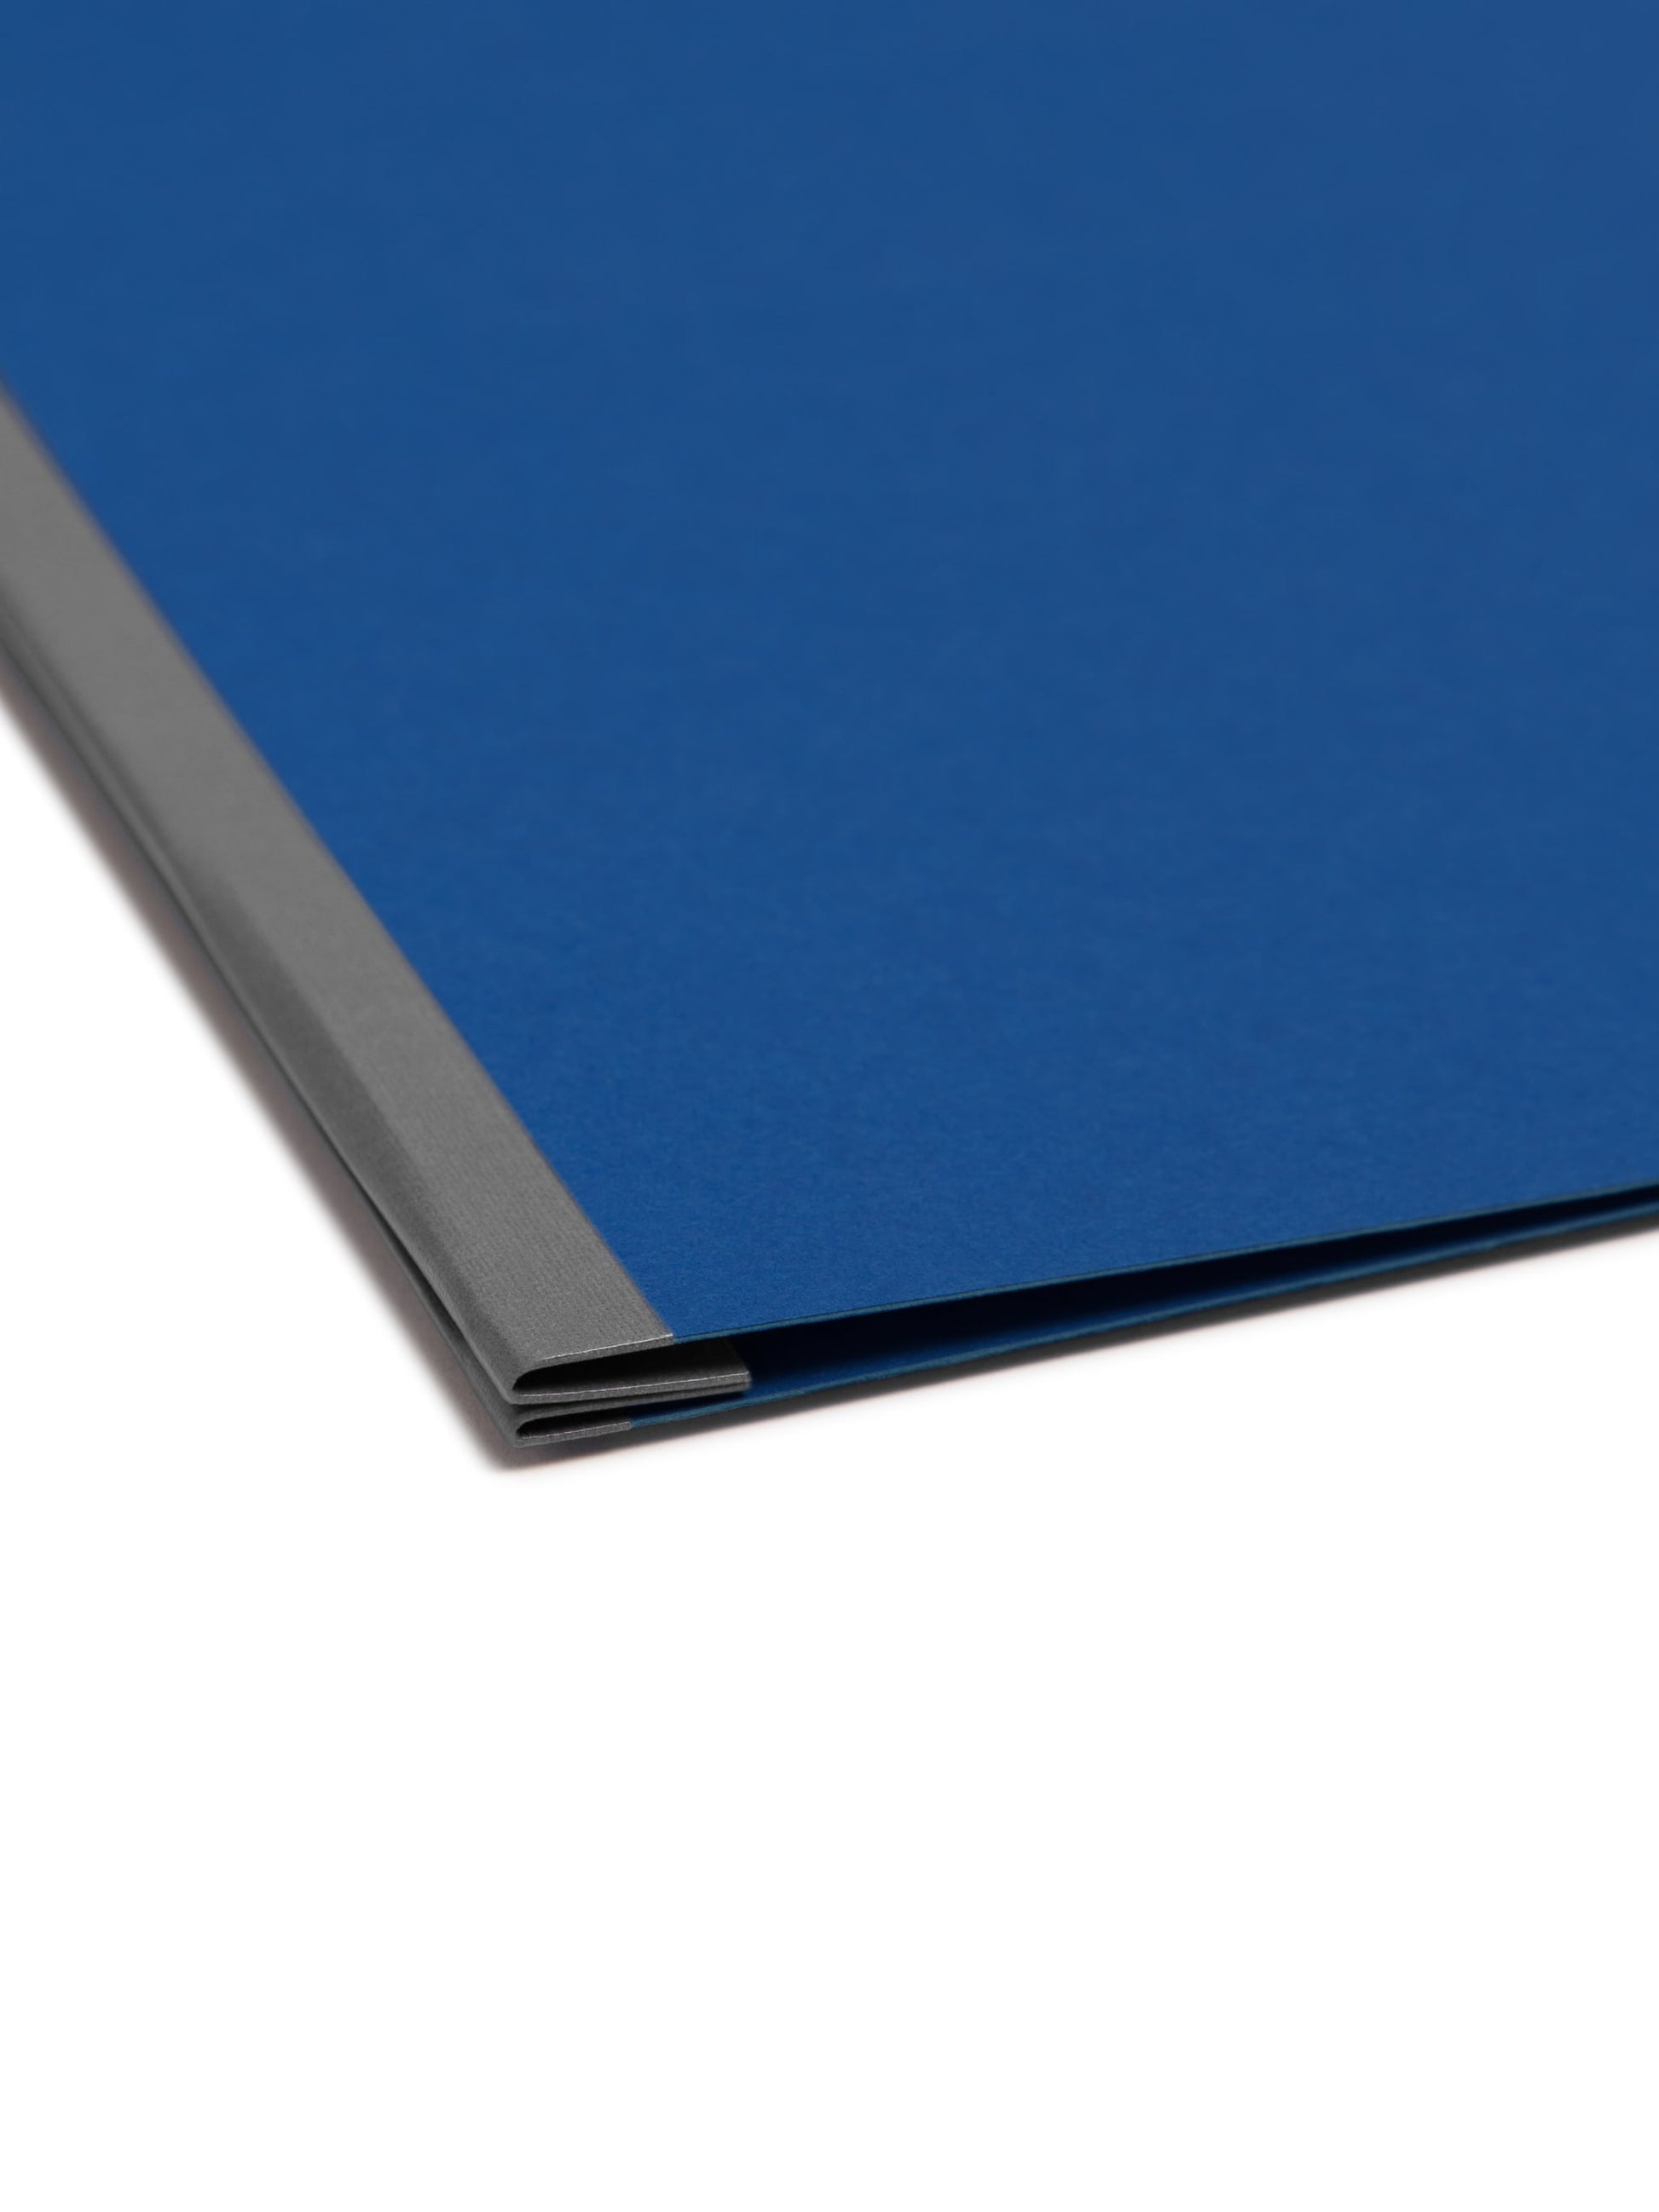 Premium Pressboard Report Covers, Metal Prong with Compressor, Side Fastener, 3 inch Expansion, 1 Fastener, Dark Blue Color, Letter Size, 